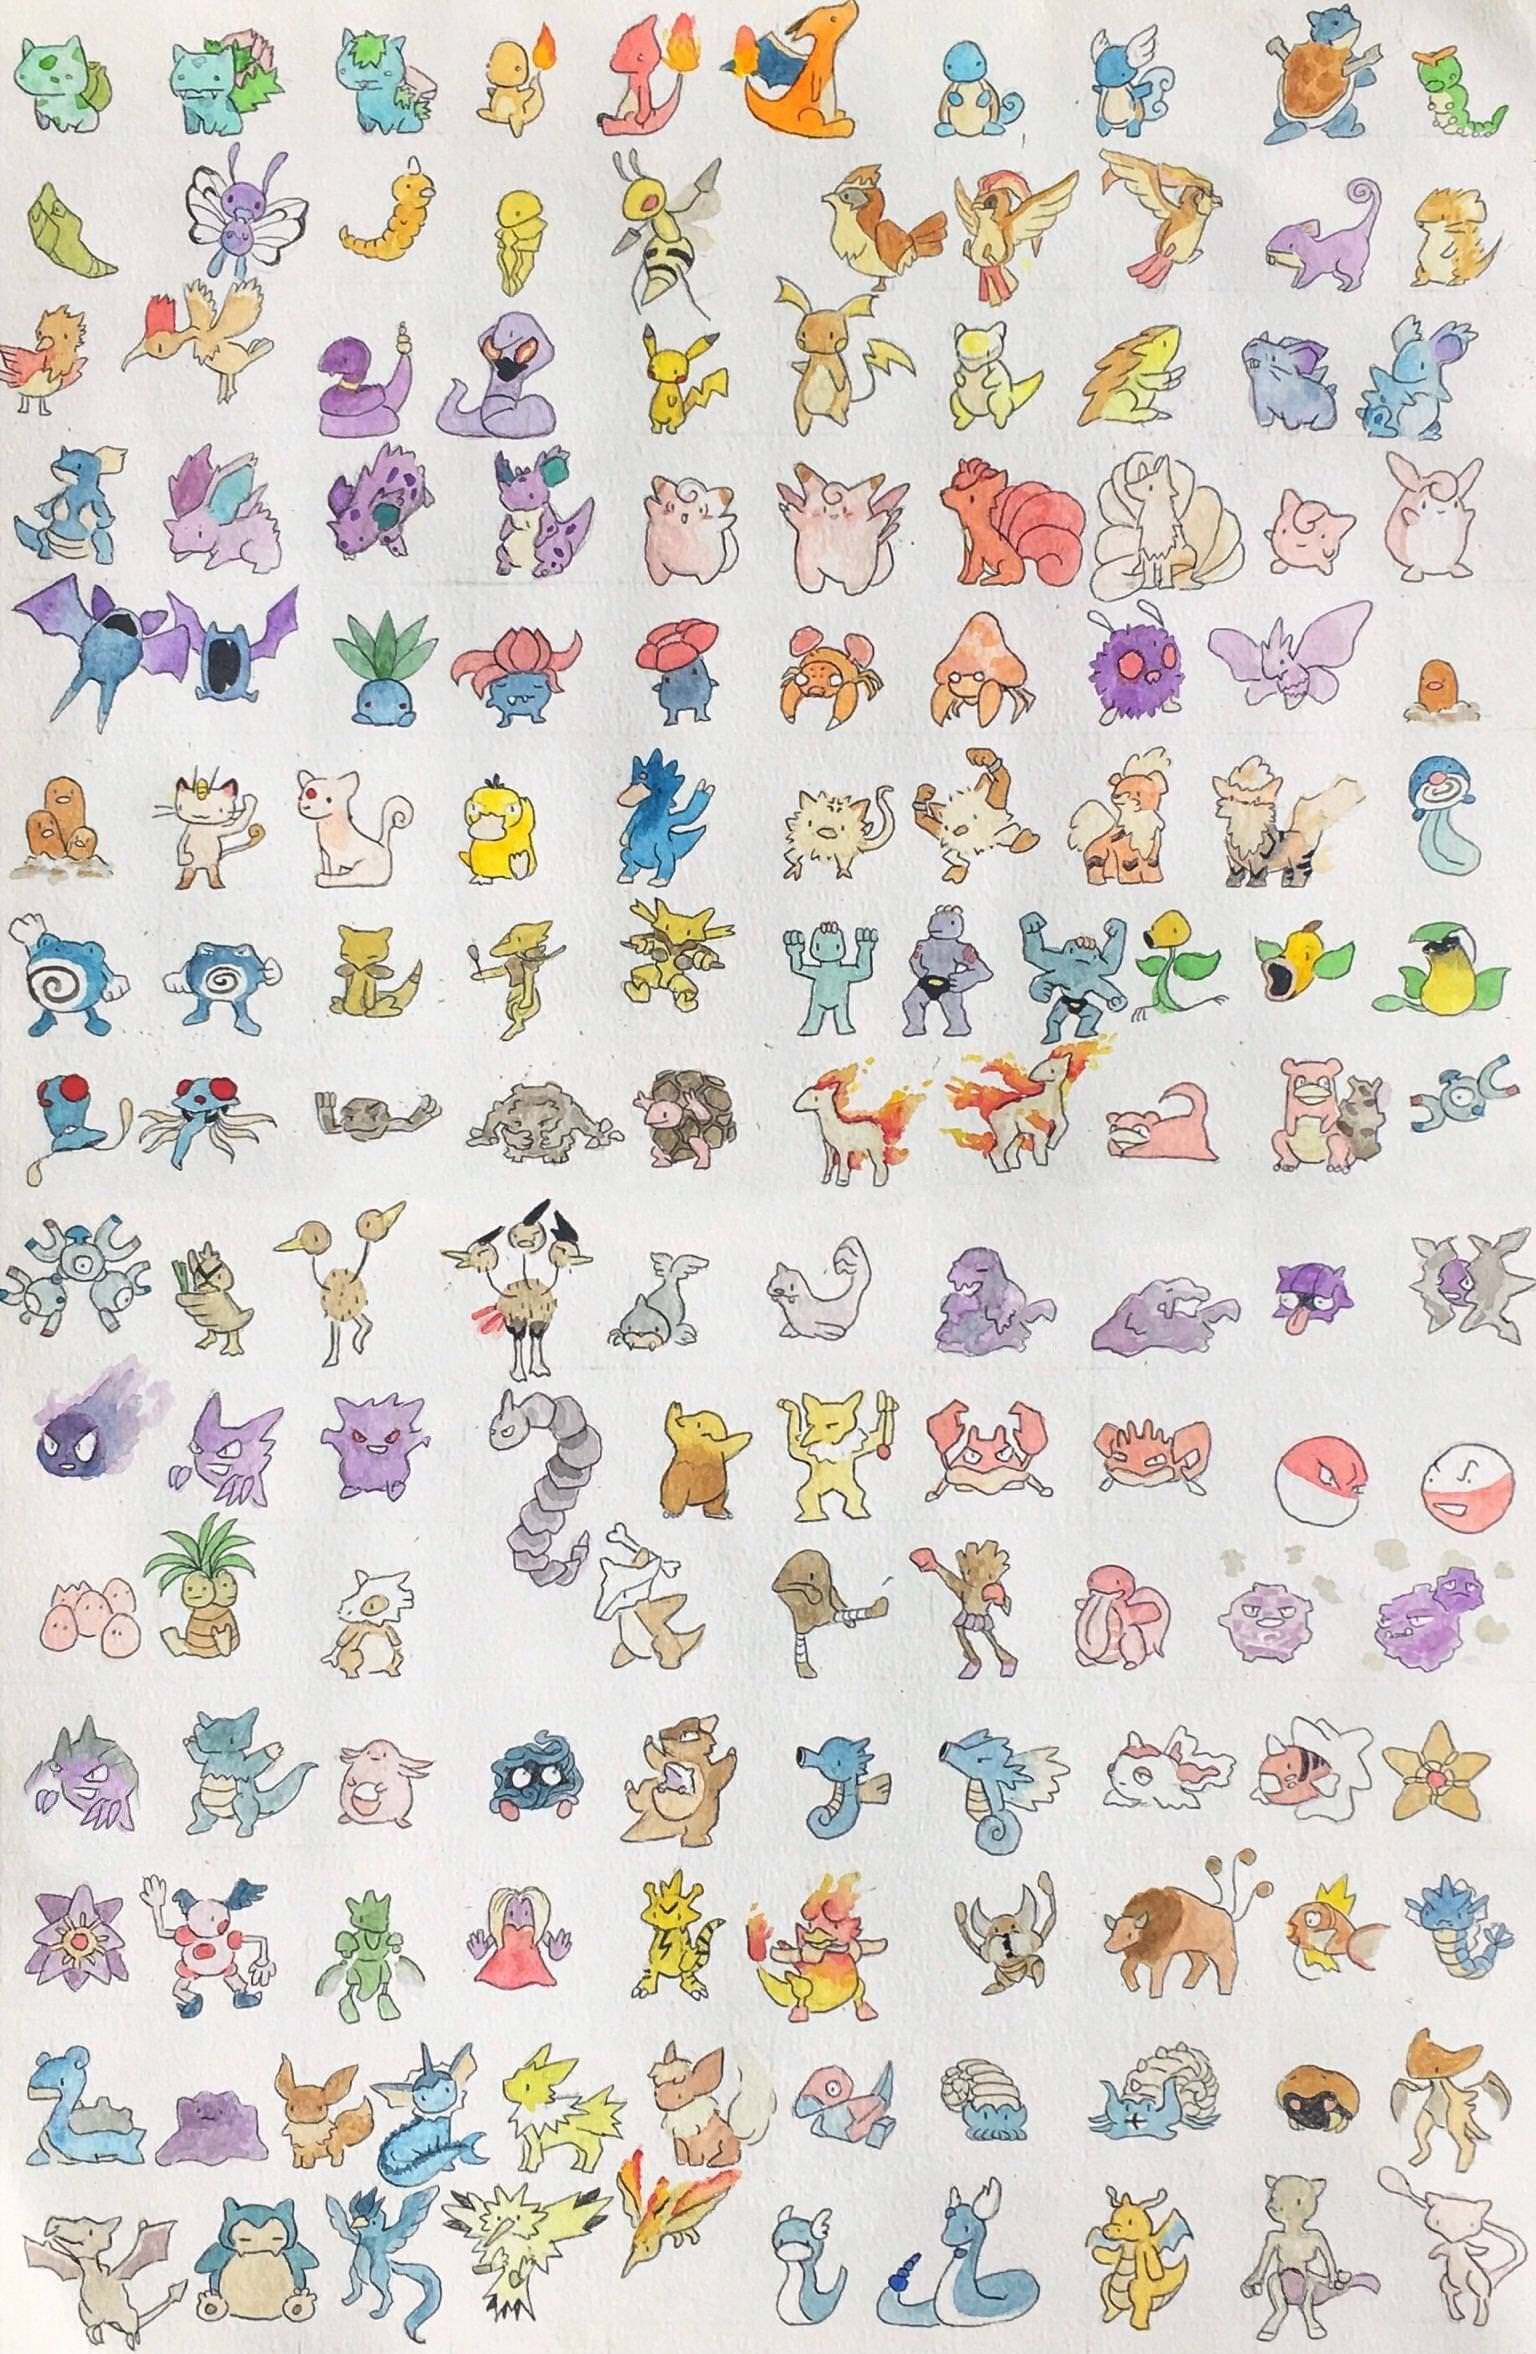 Pokémon Gen 1 Wallpapers - Wallpaper Cave